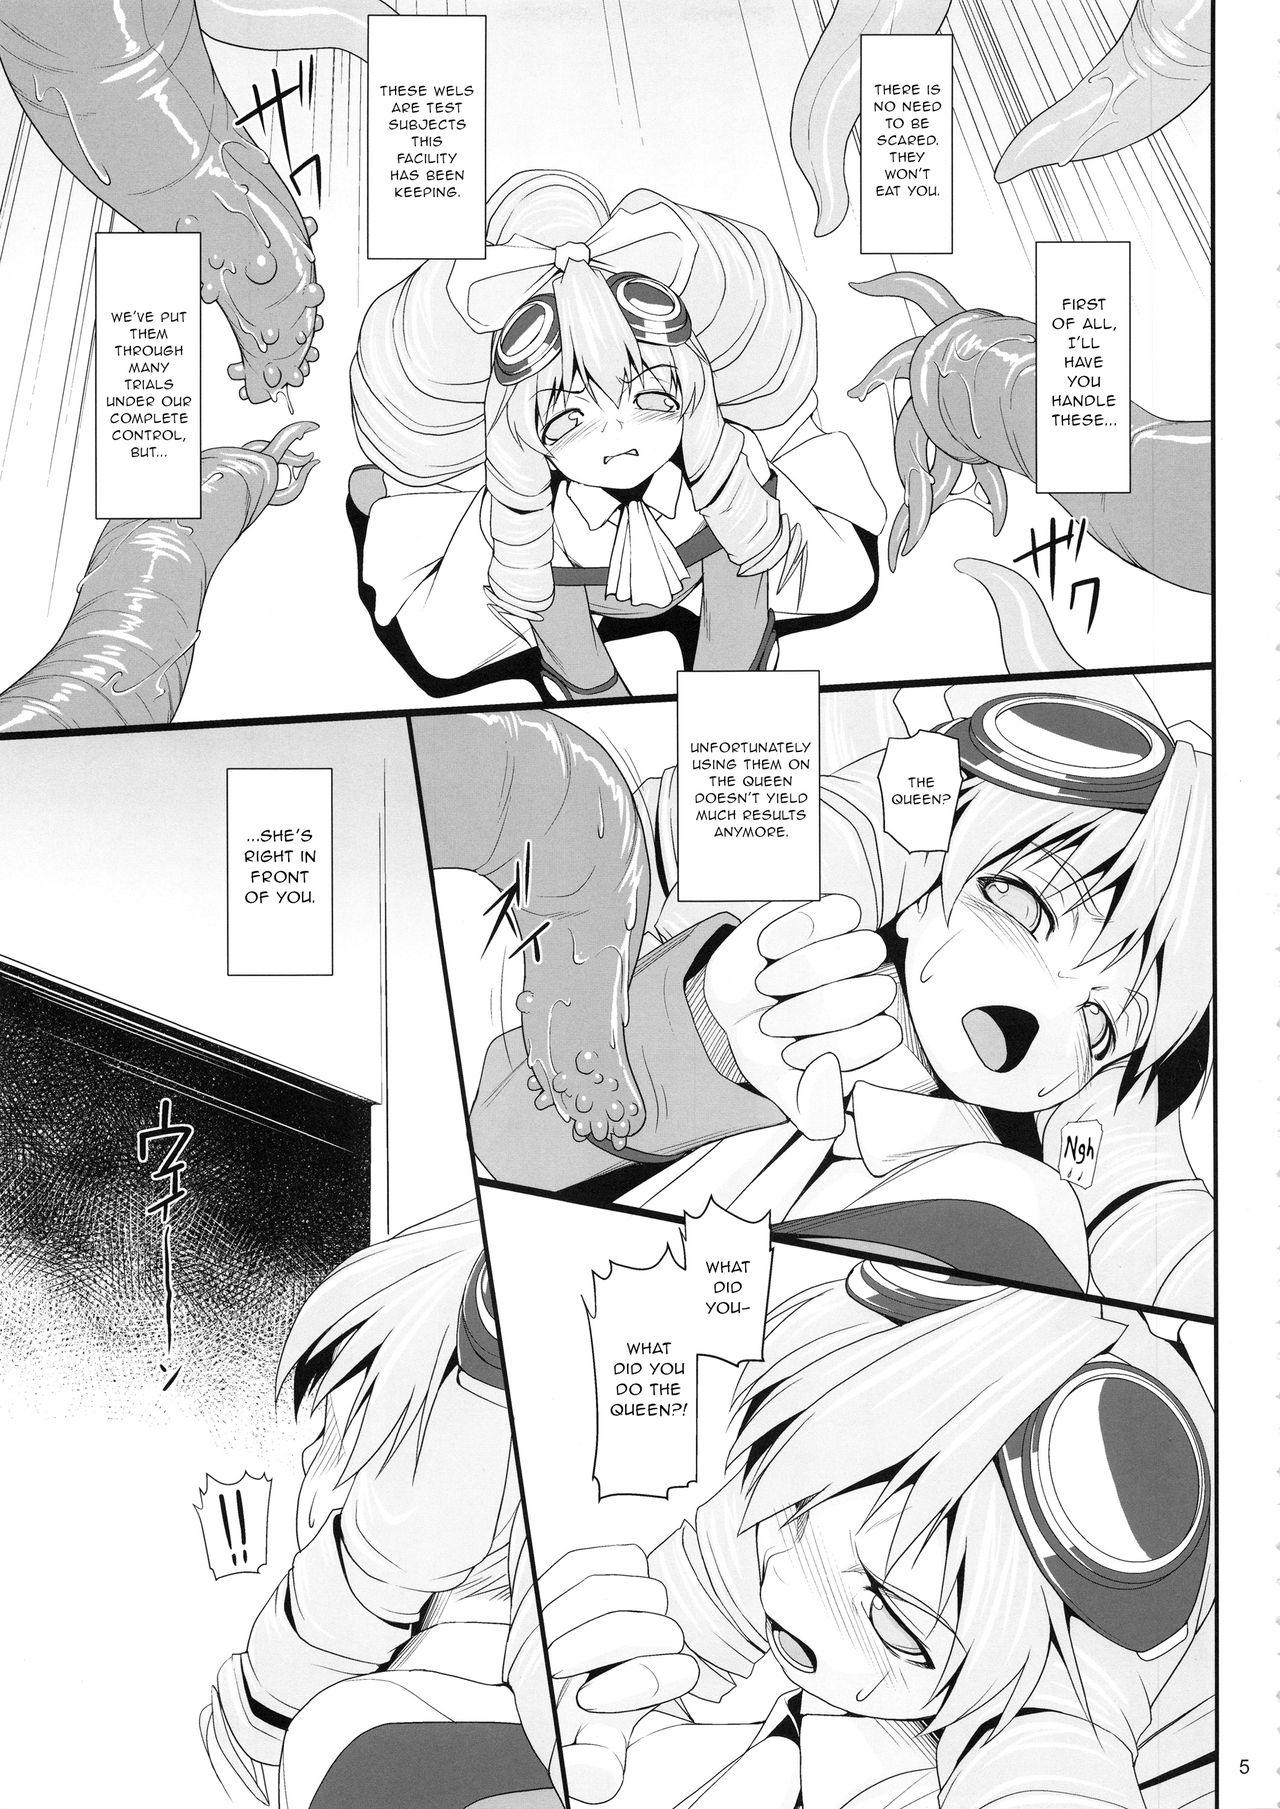 Best Blow Job Shokuzai no Ma 5 - Xenogears Mofos - Page 4